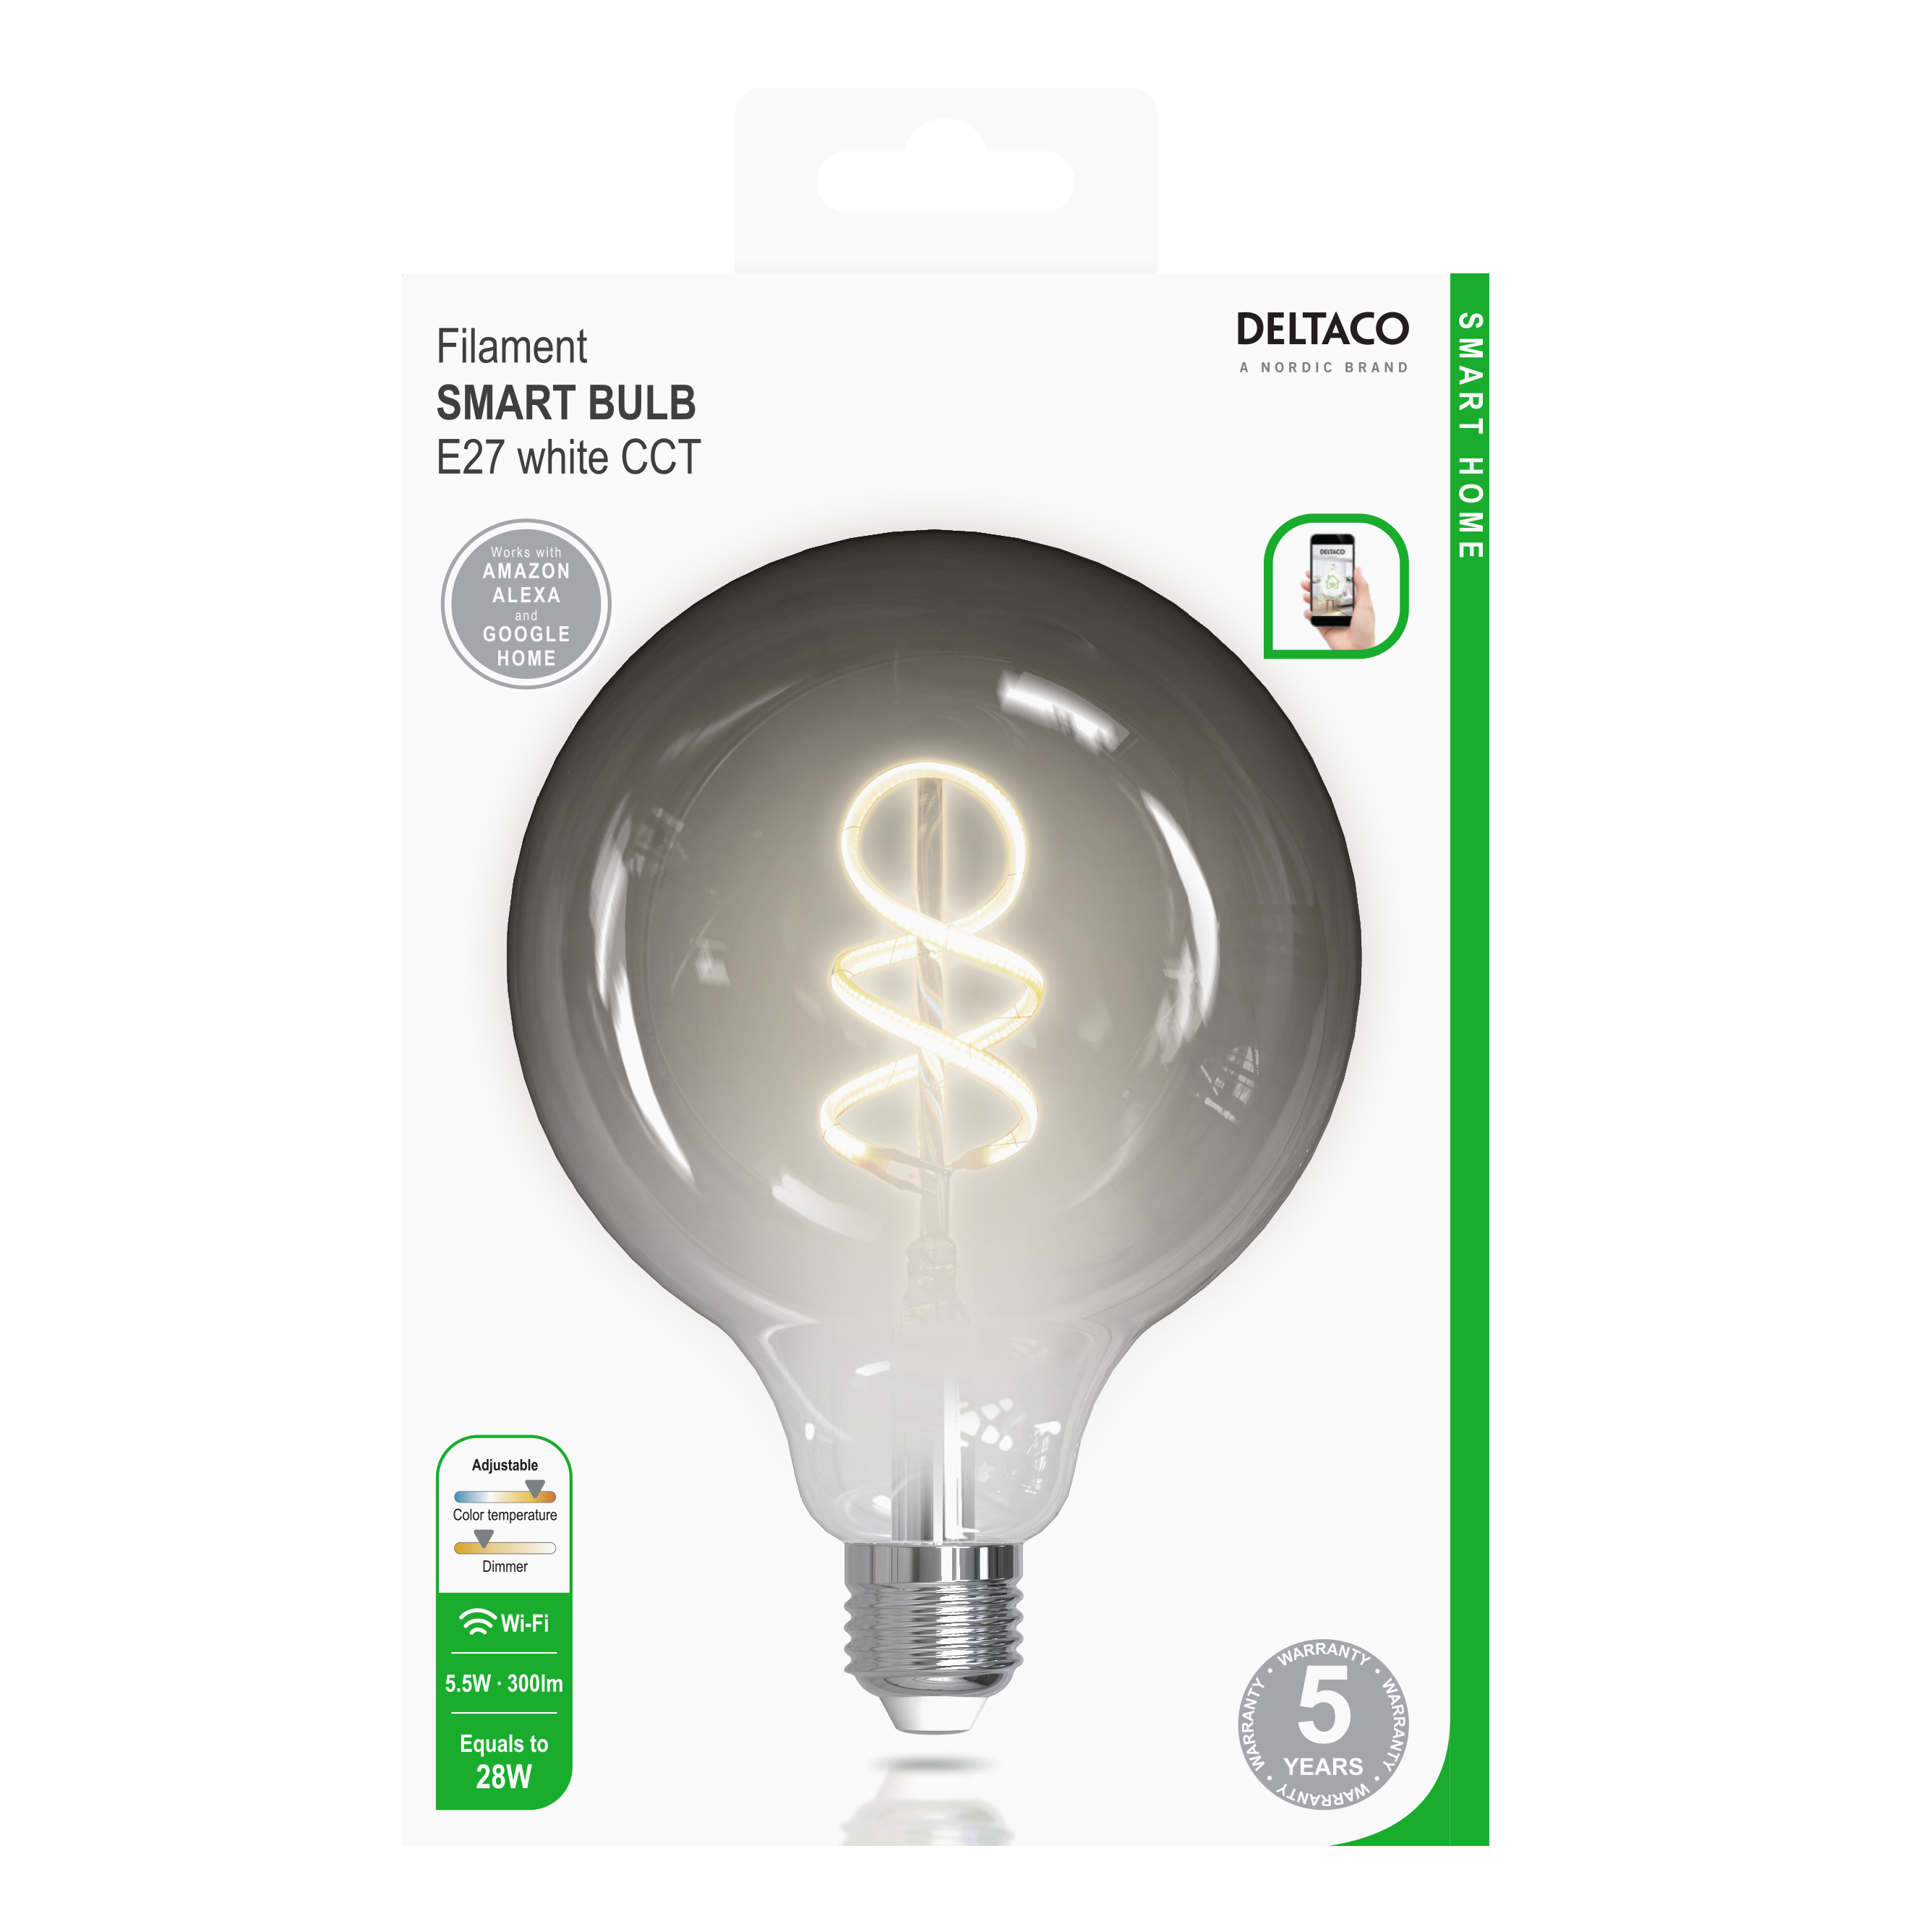 bruid klink viering DELTACO Smart Bulb E27 Spiral Filament LED Bulb 5.5W 300lm G125 WiFi –  Dimmable White LED Light - OKdo